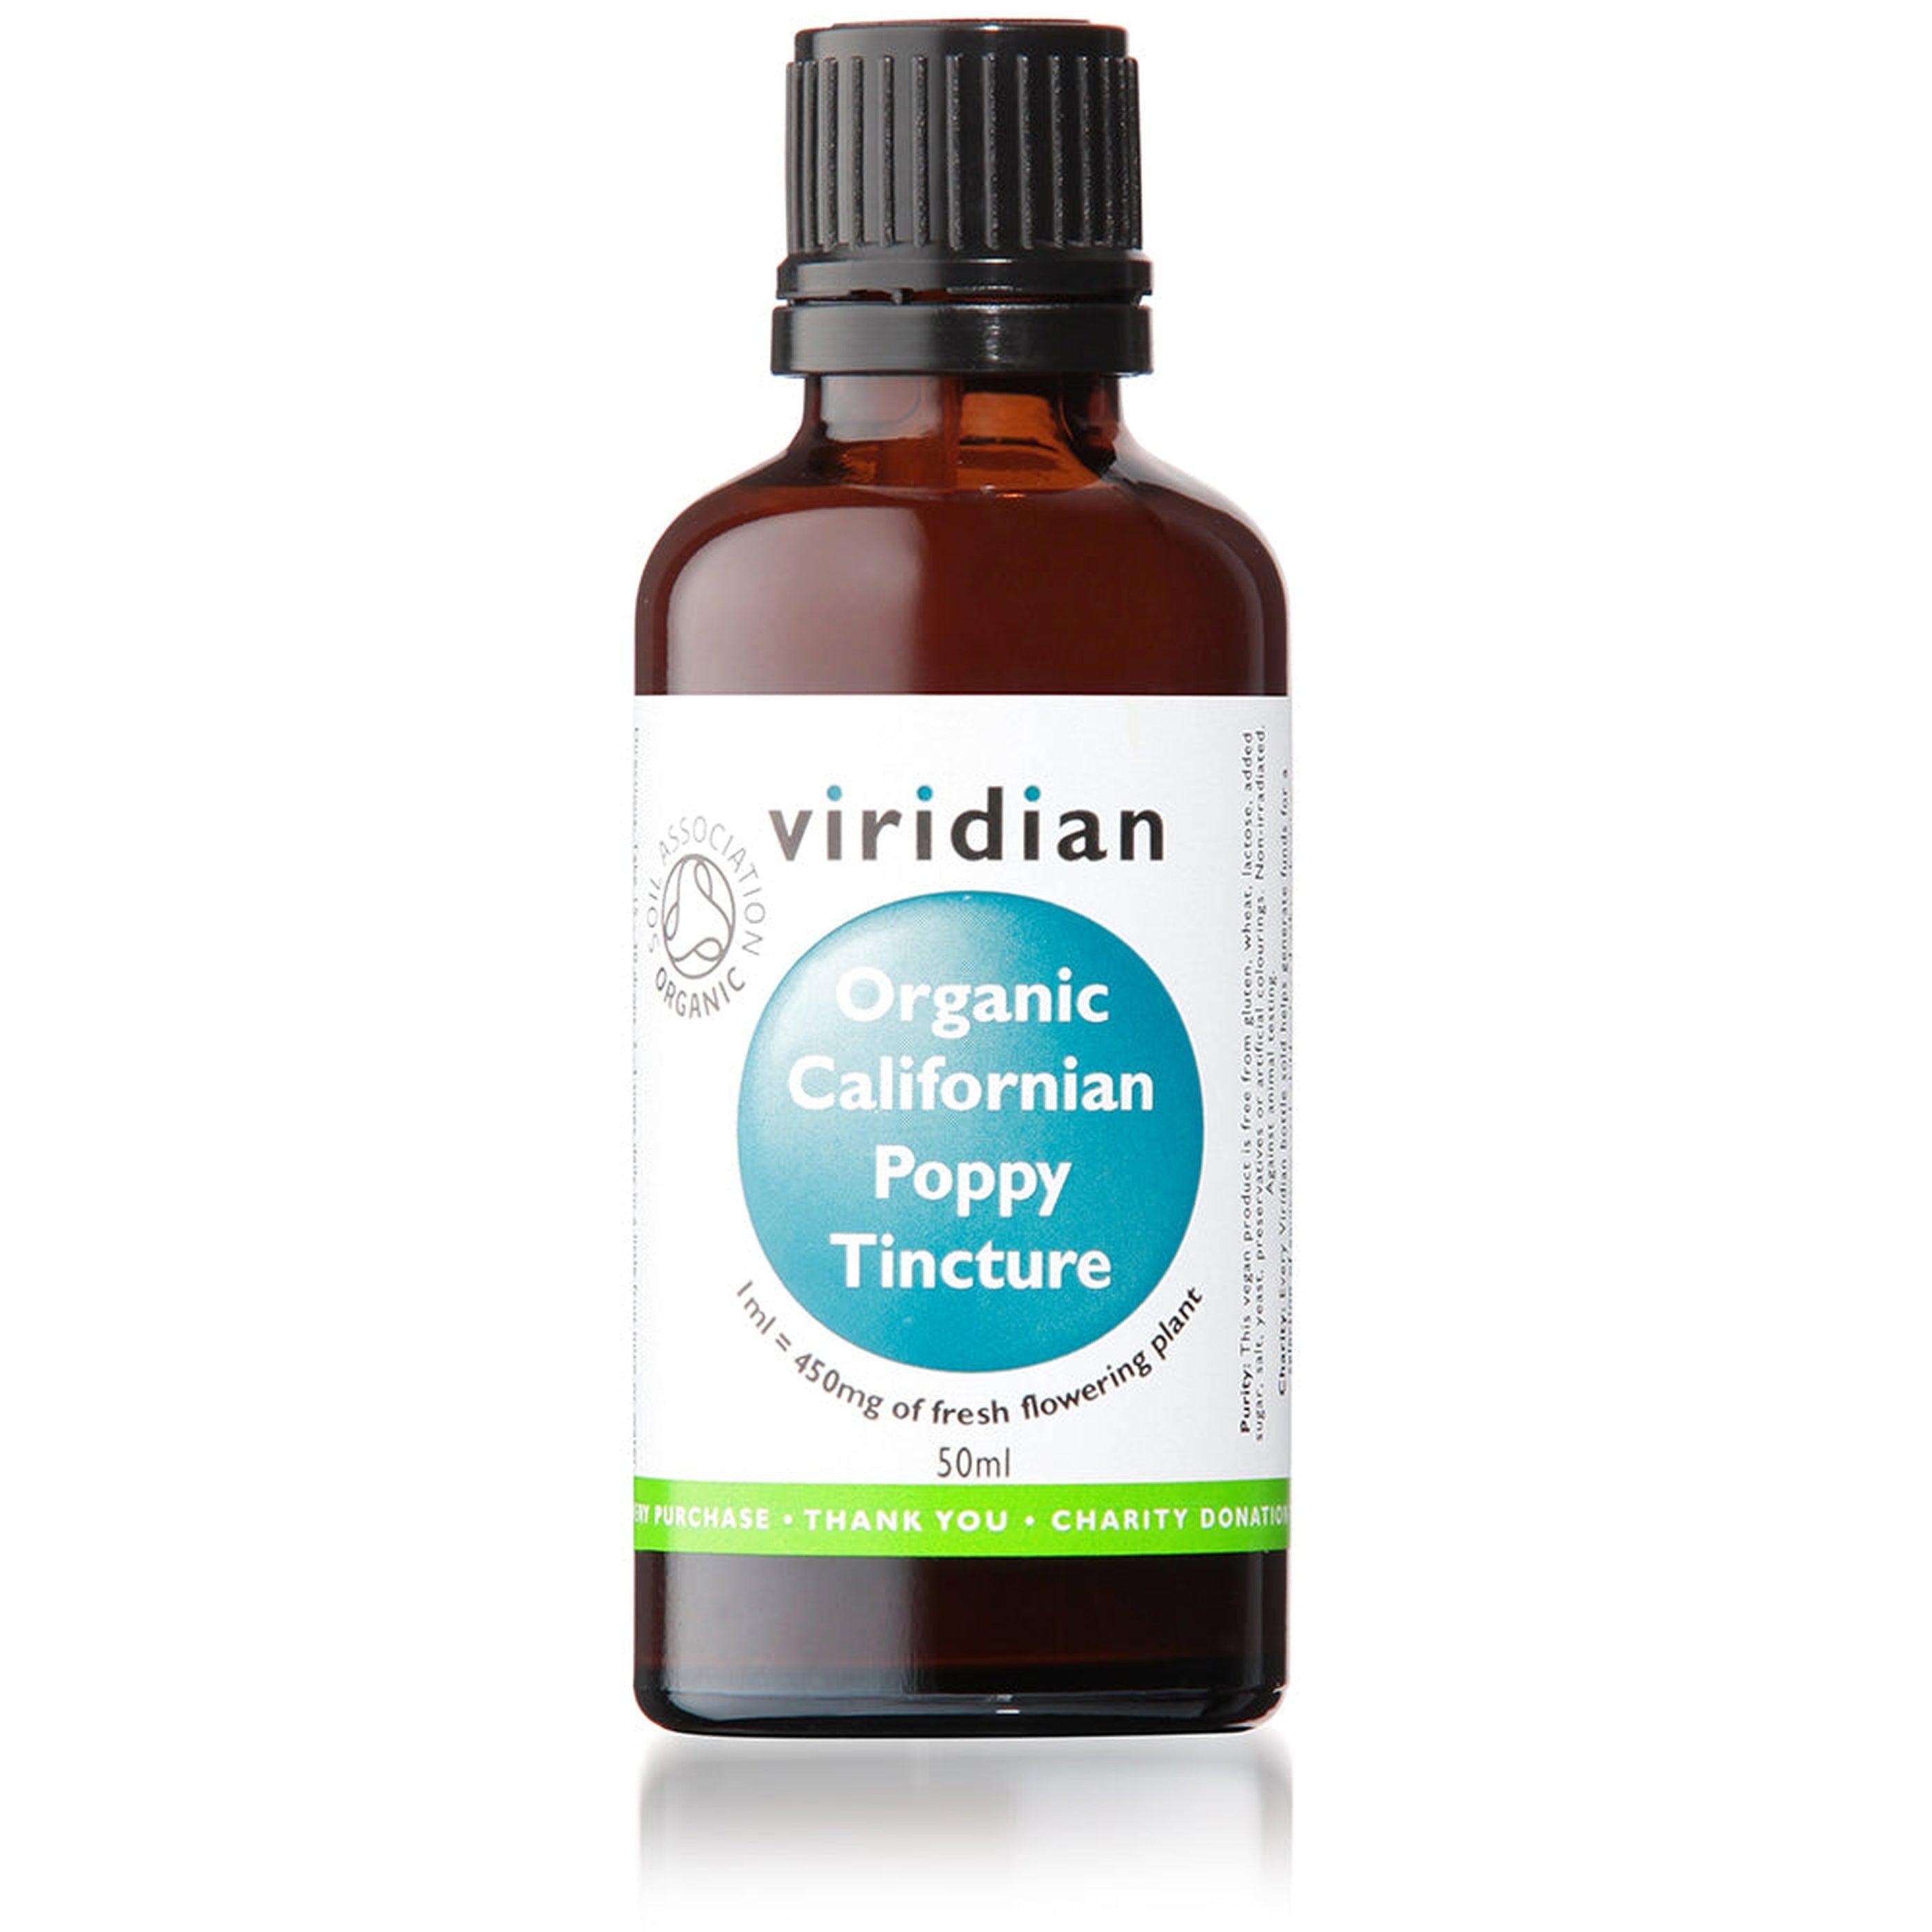 Viridian Organic California Poppy Tincture 50ml- Lillys Pharmacy and Health Store